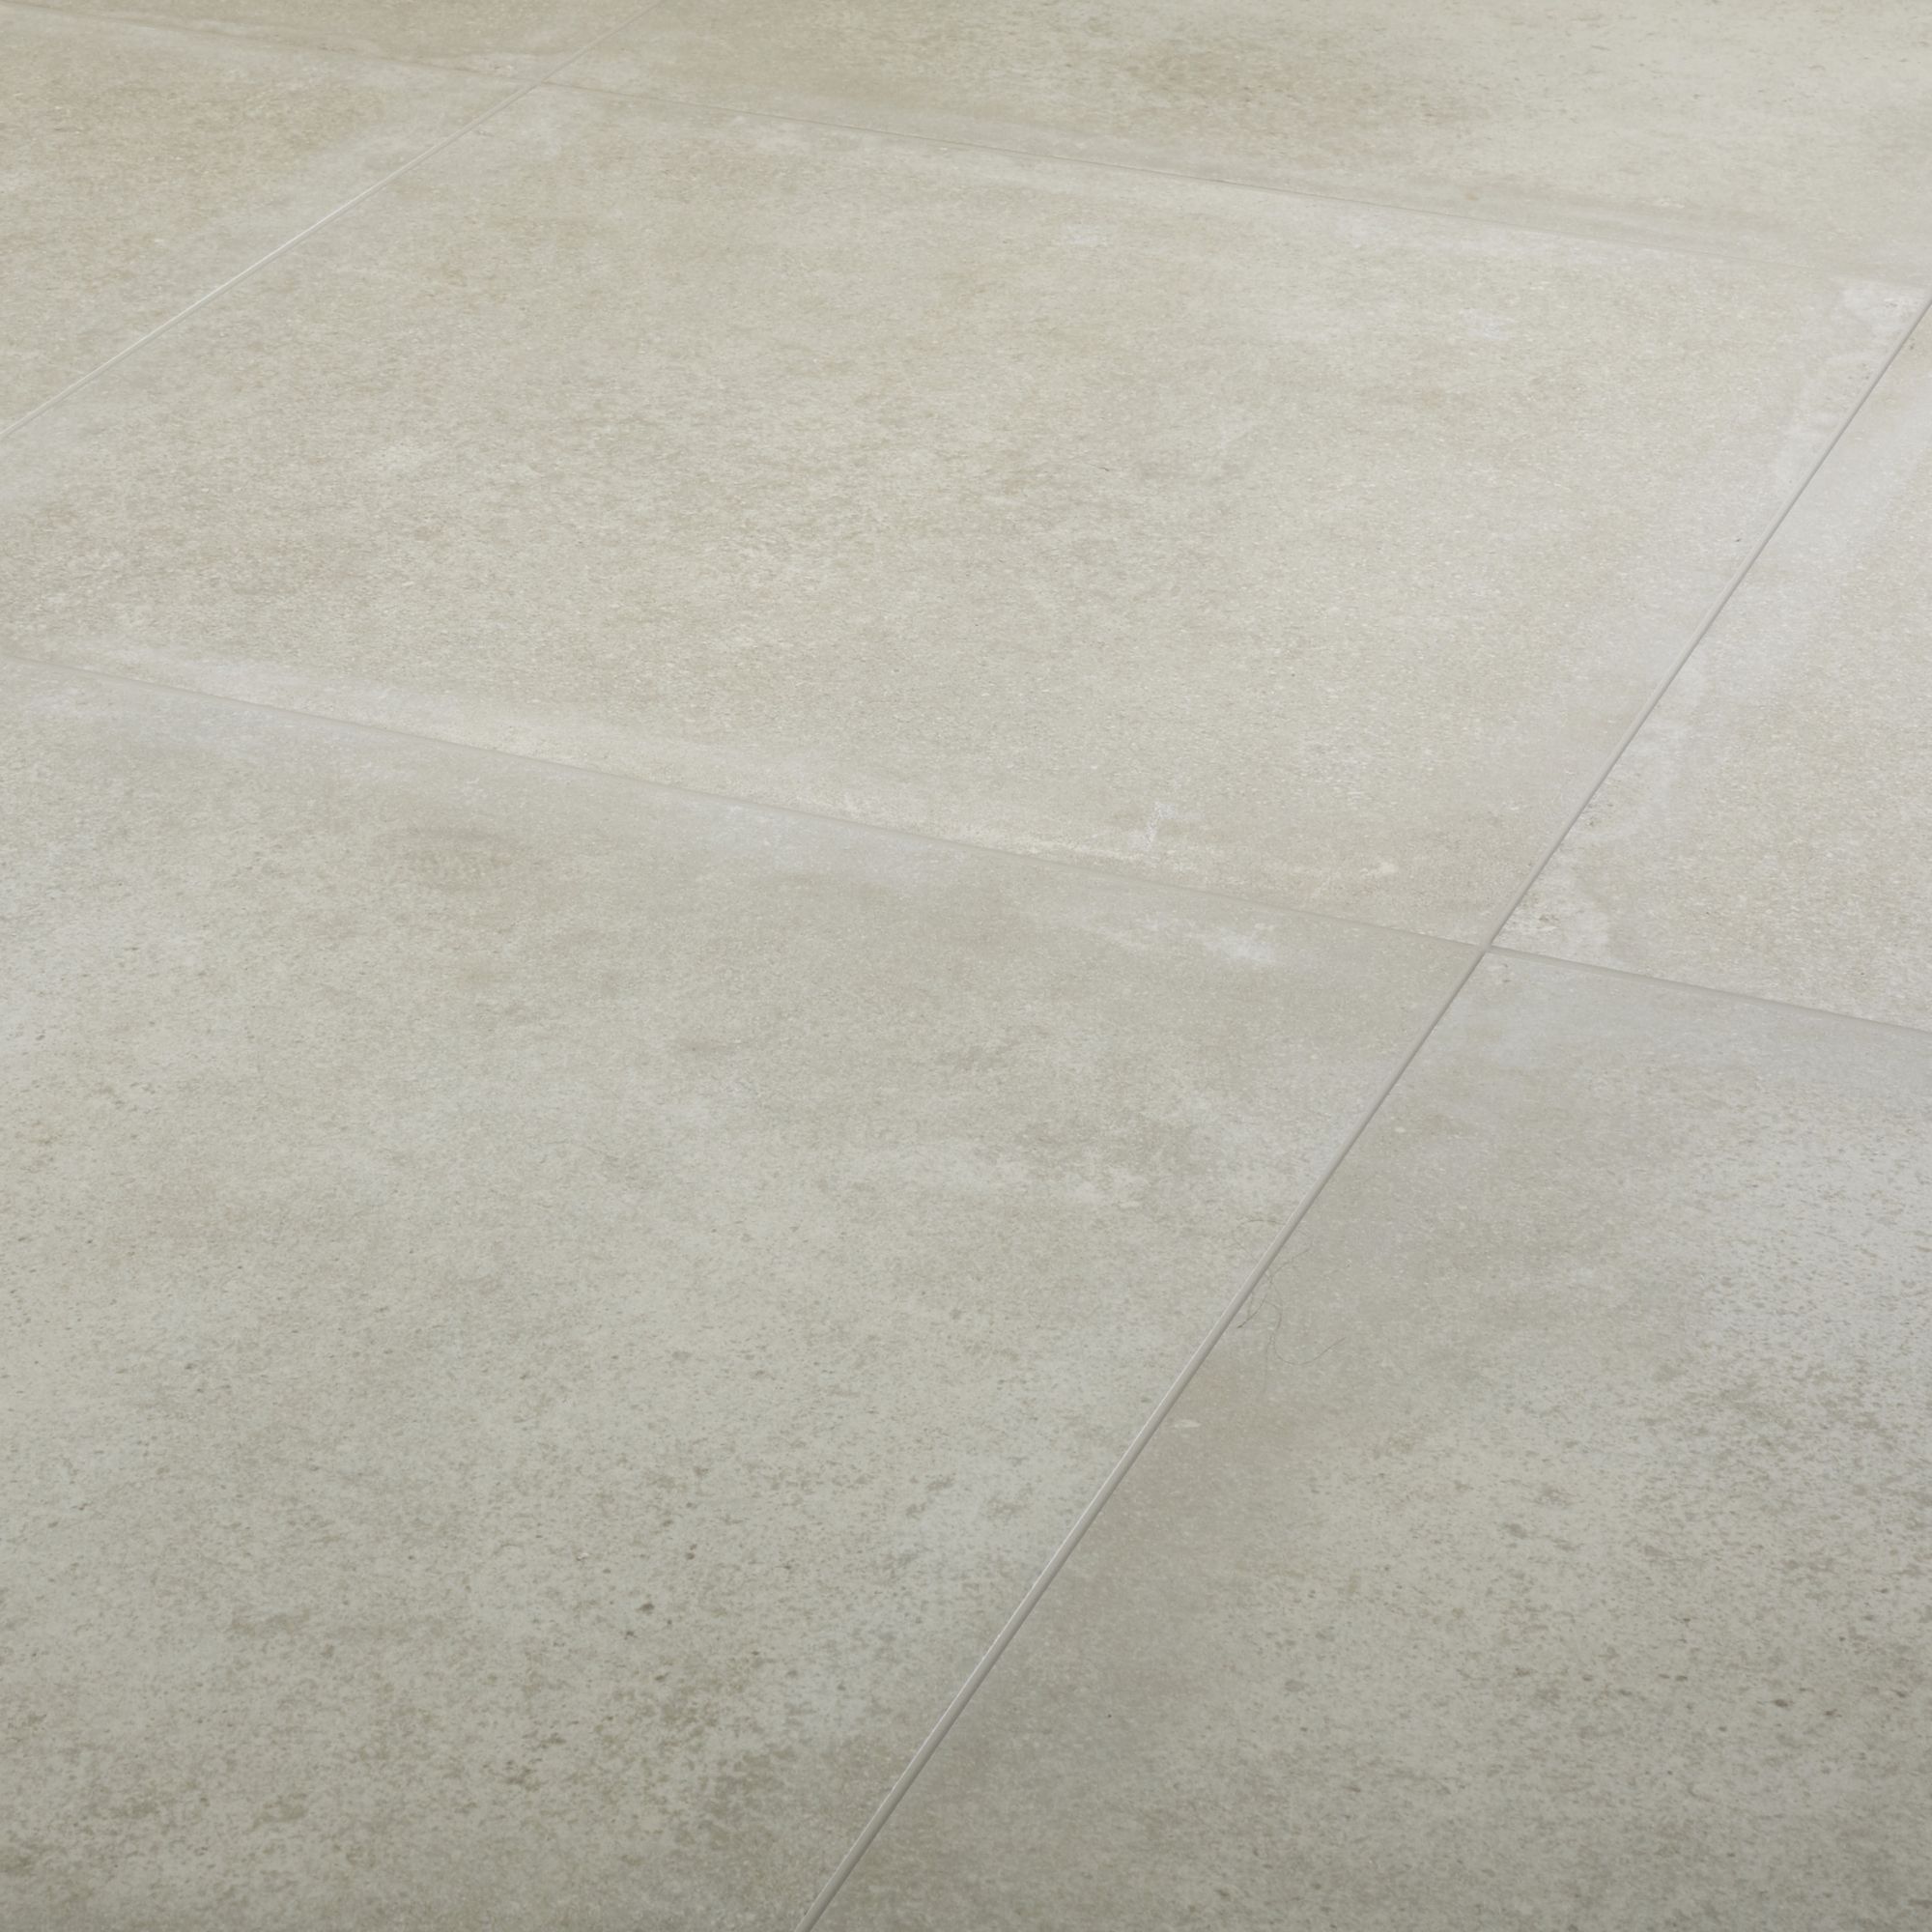 Colours Kontainer Greige Matt Flat Concrete effect Textured Porcelain Indoor Wall & floor Tile, Pack of 3, (L)590mm (W)590mm